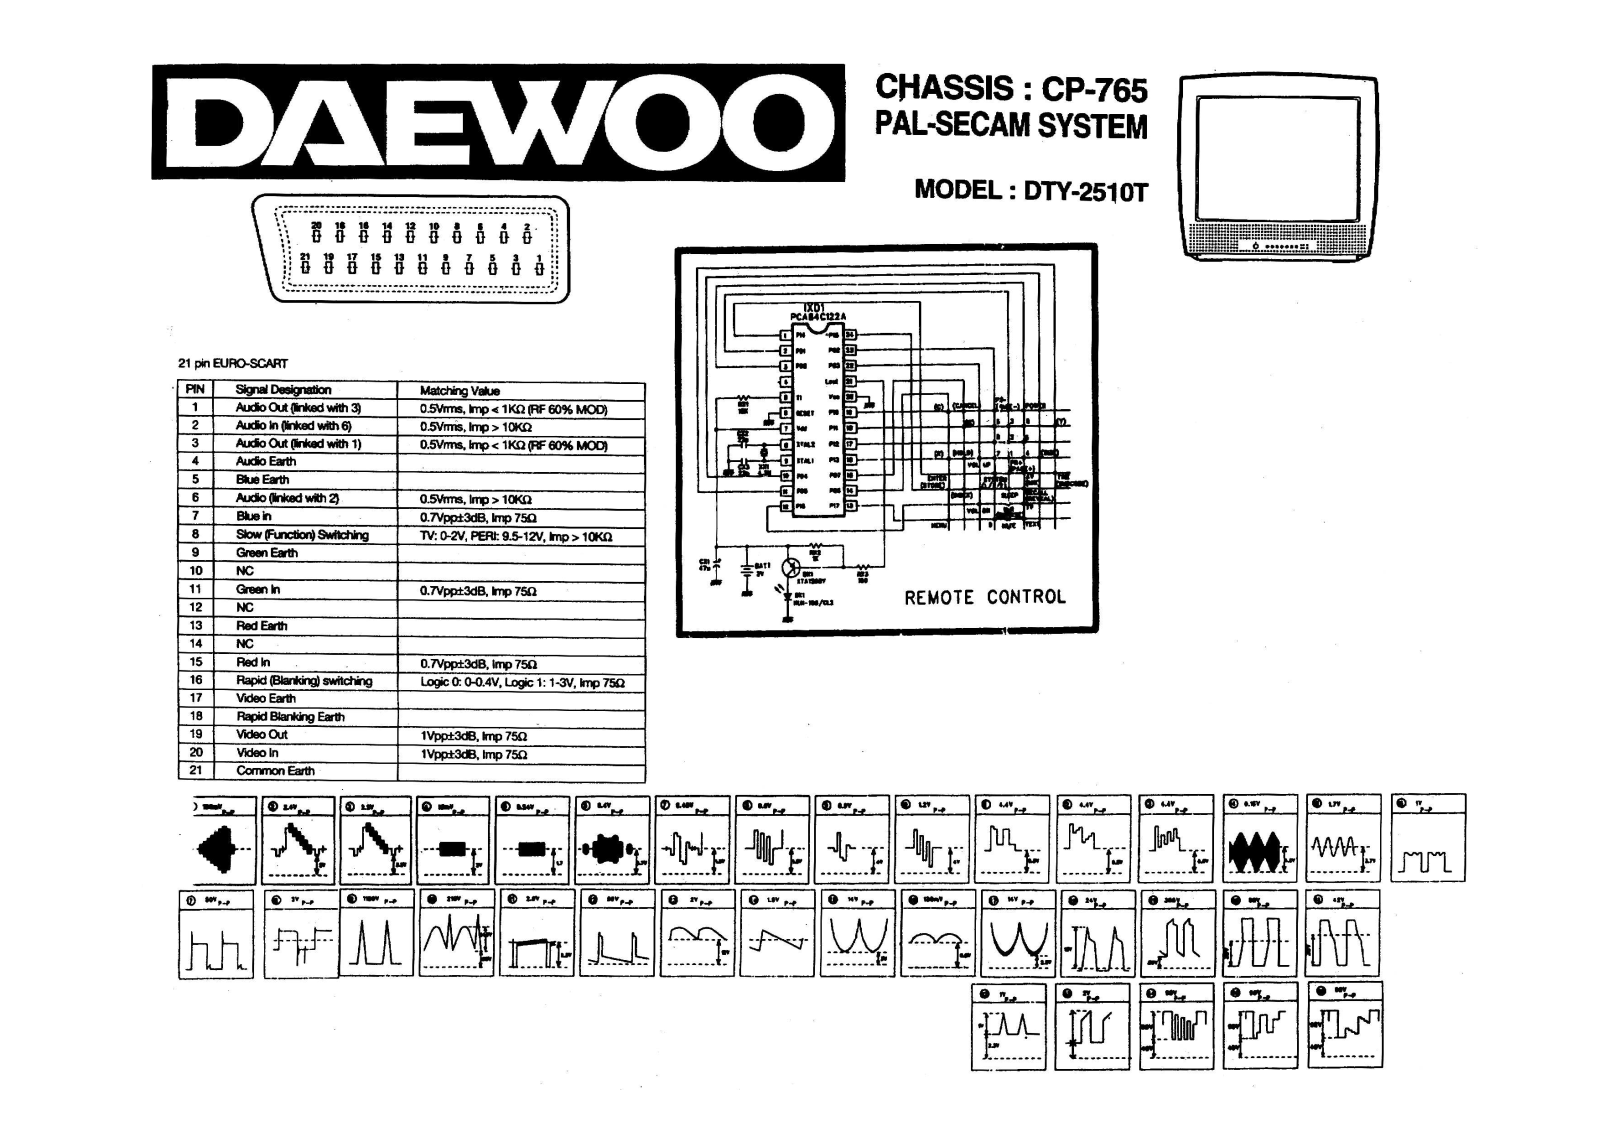 Daewoo CP-765 Service Manual